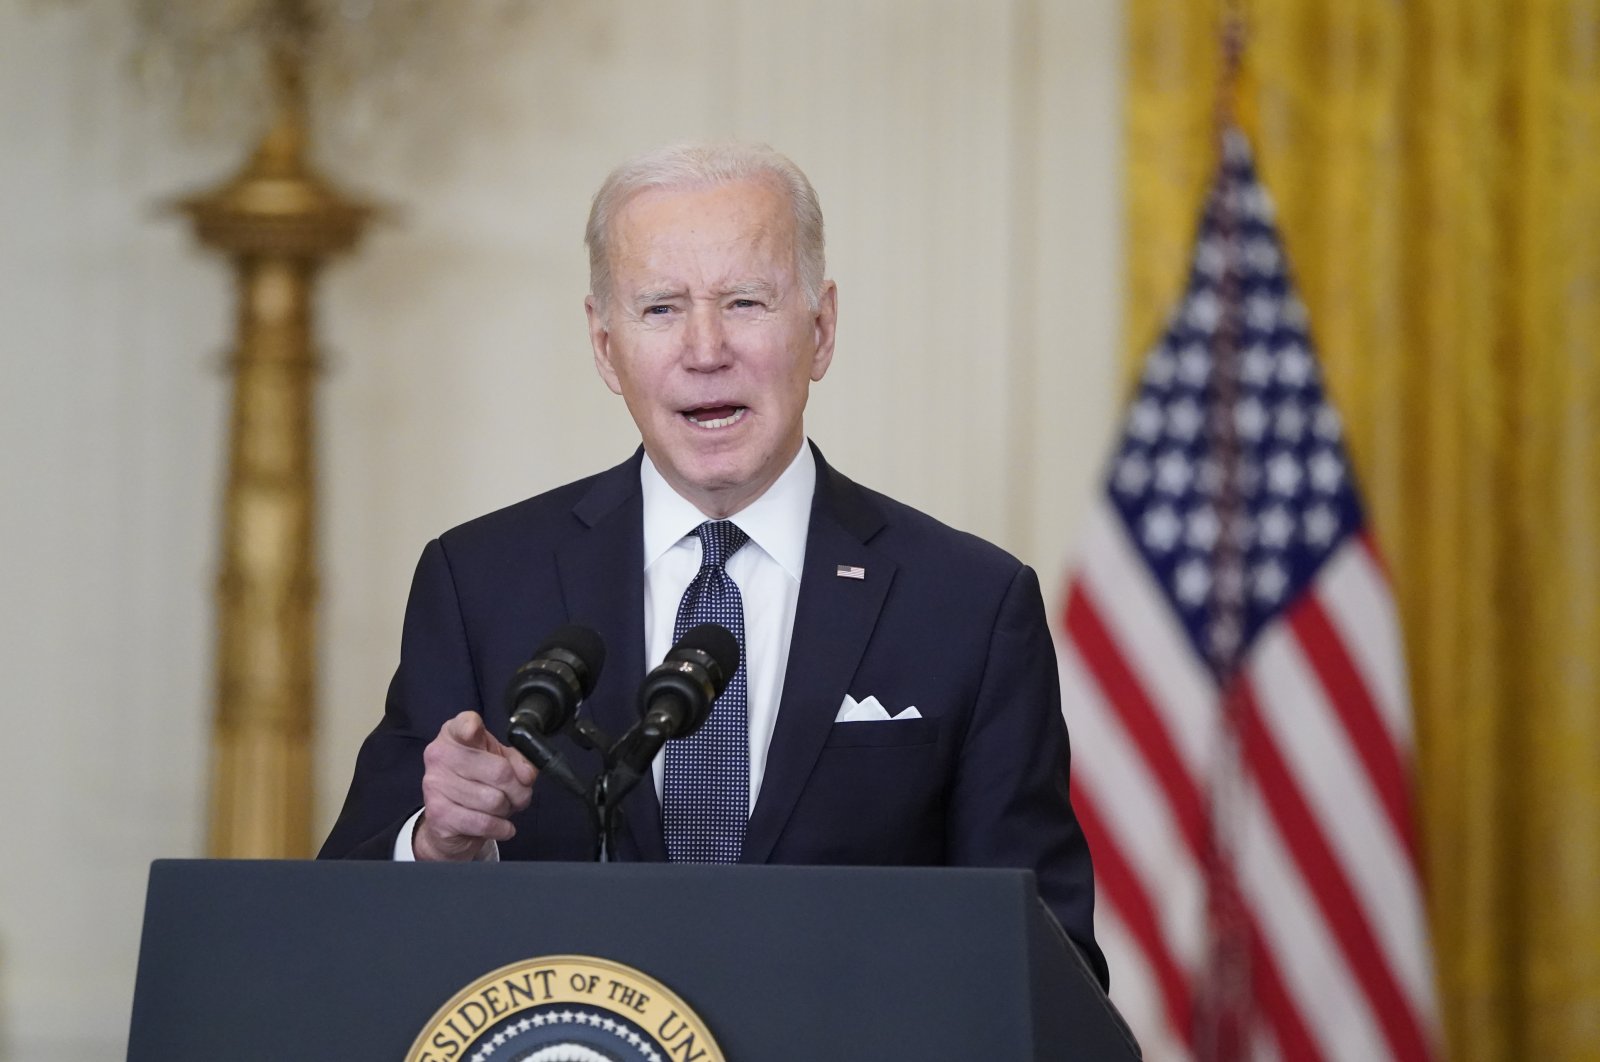 U.S. President Joe Biden speaks about Ukraine in the East Room of the White House, Washington D.C., U.S., Feb. 15, 2022. (AP Photo)